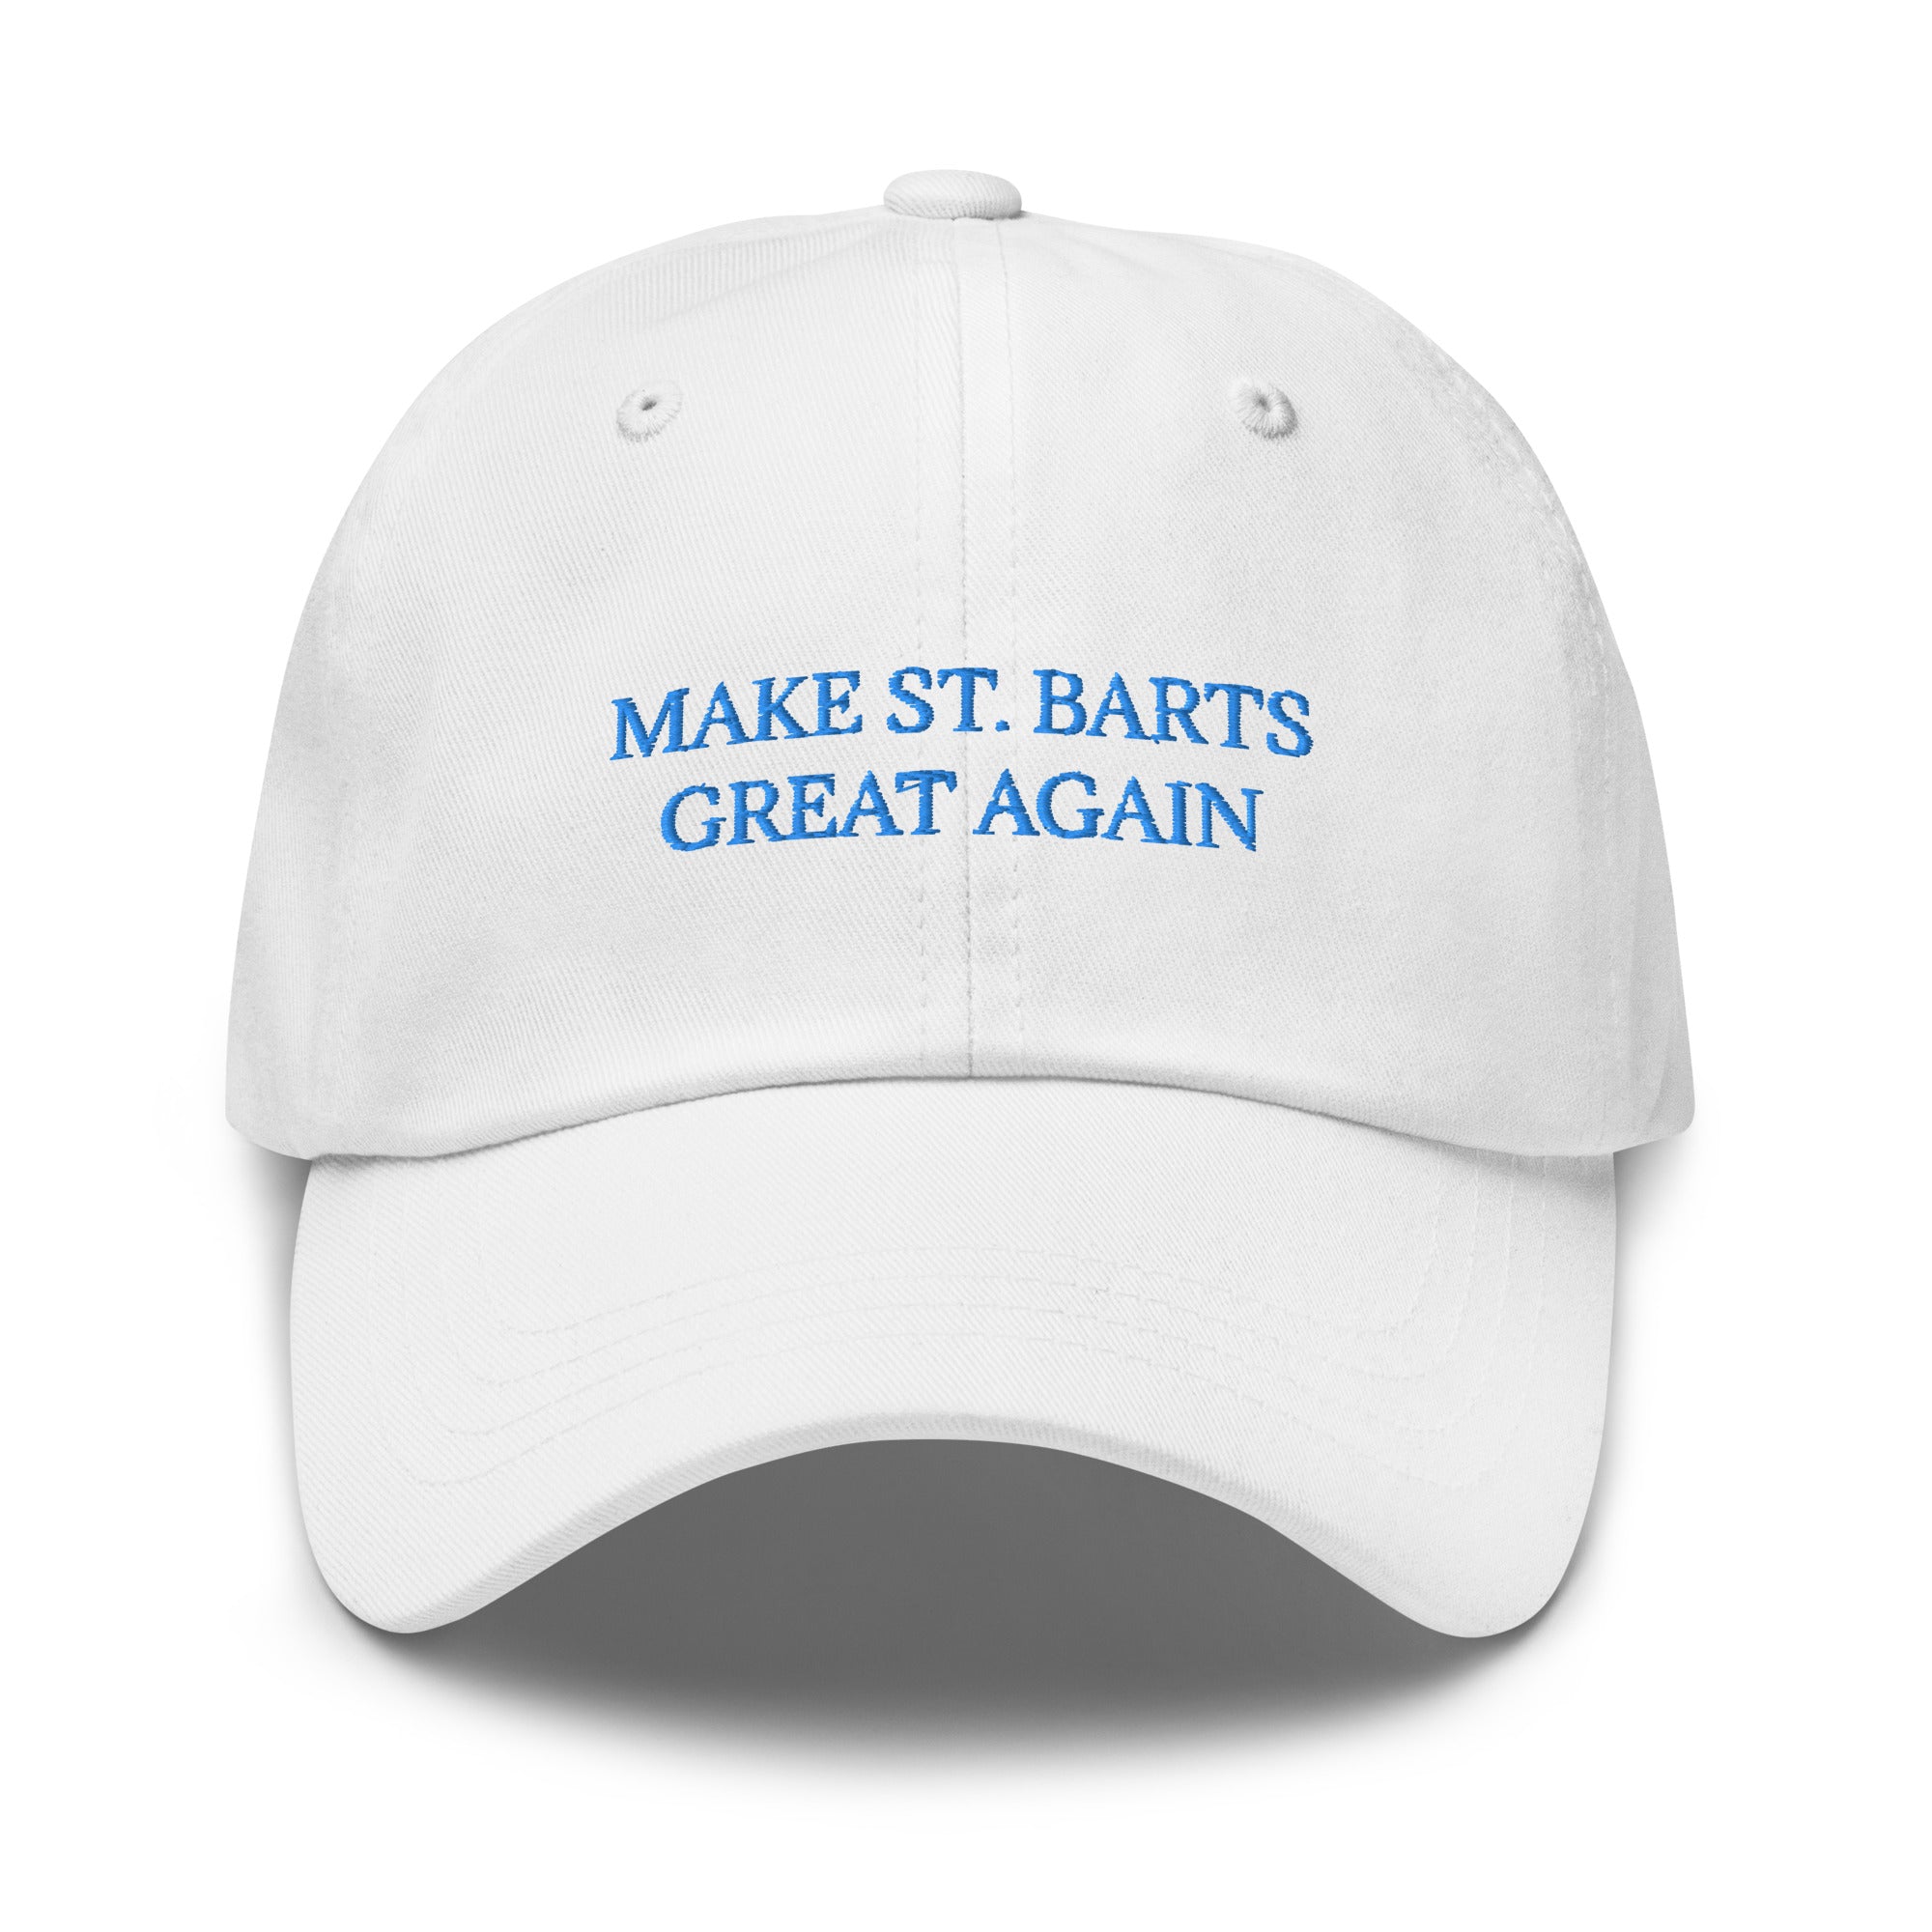 Make st.barts great again - Dad hat